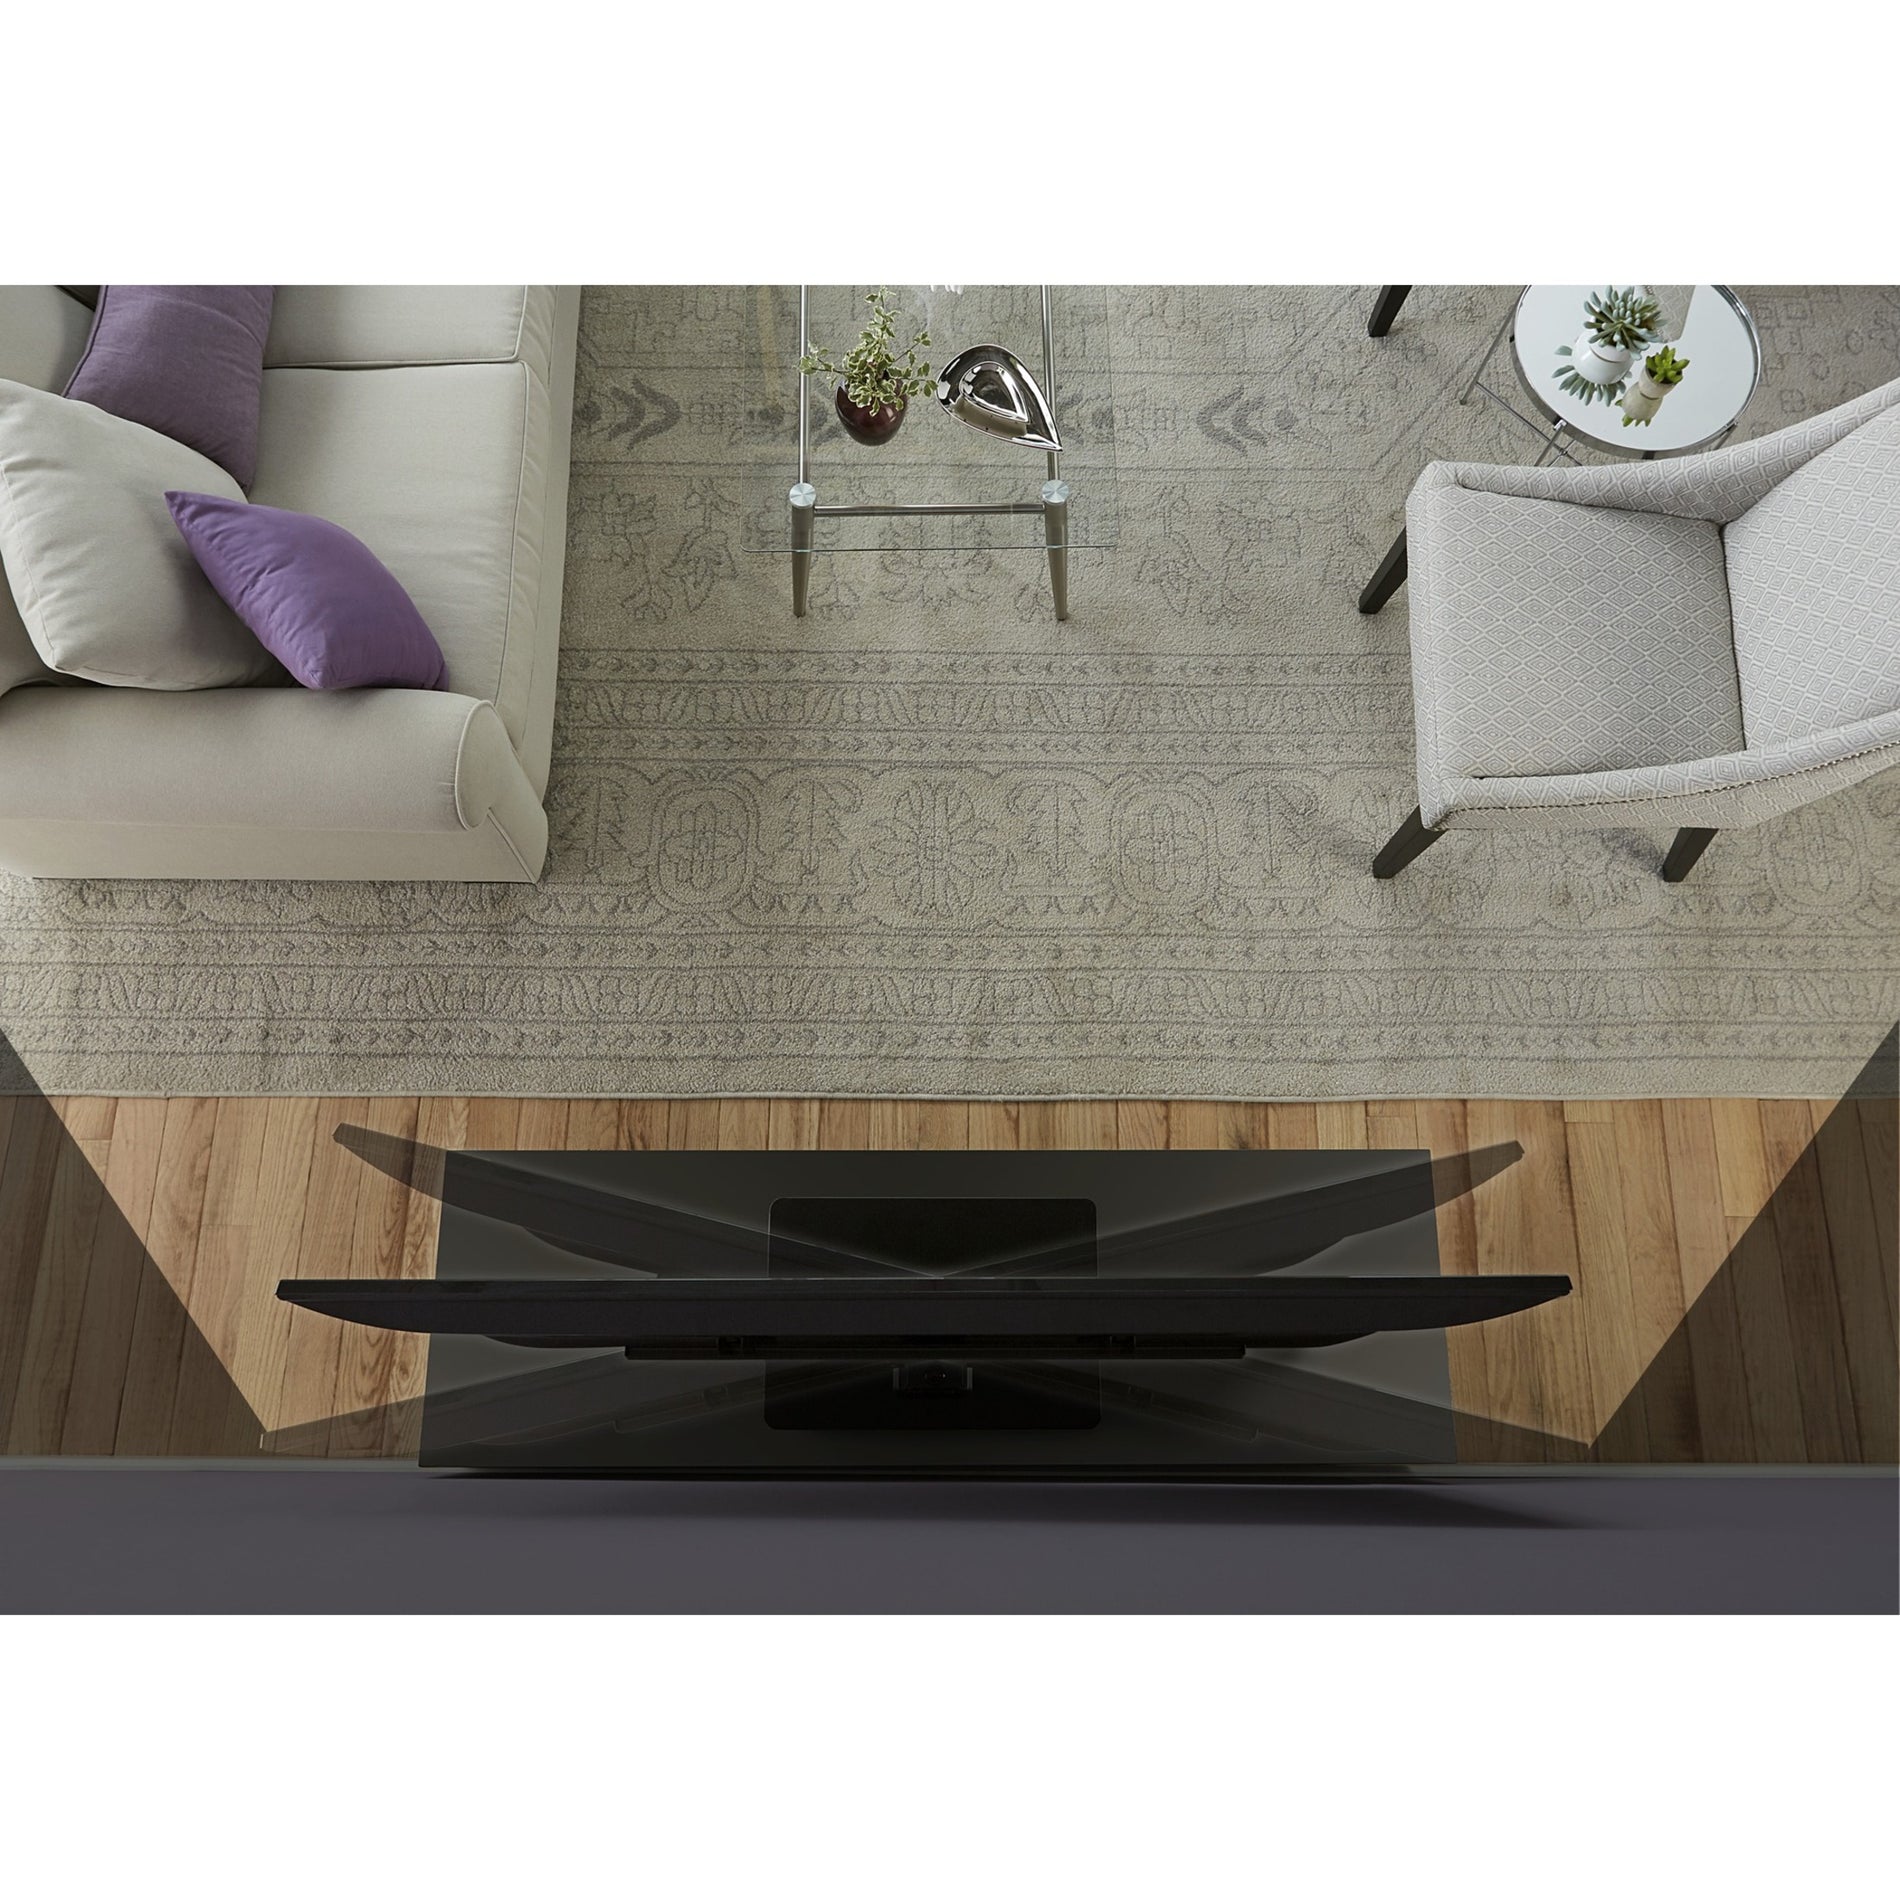 SANUS VSTV1-B1 Swivel TV Stand fits 32"-60" TVs, Multiple Viewing Angle, 5 Year Warranty